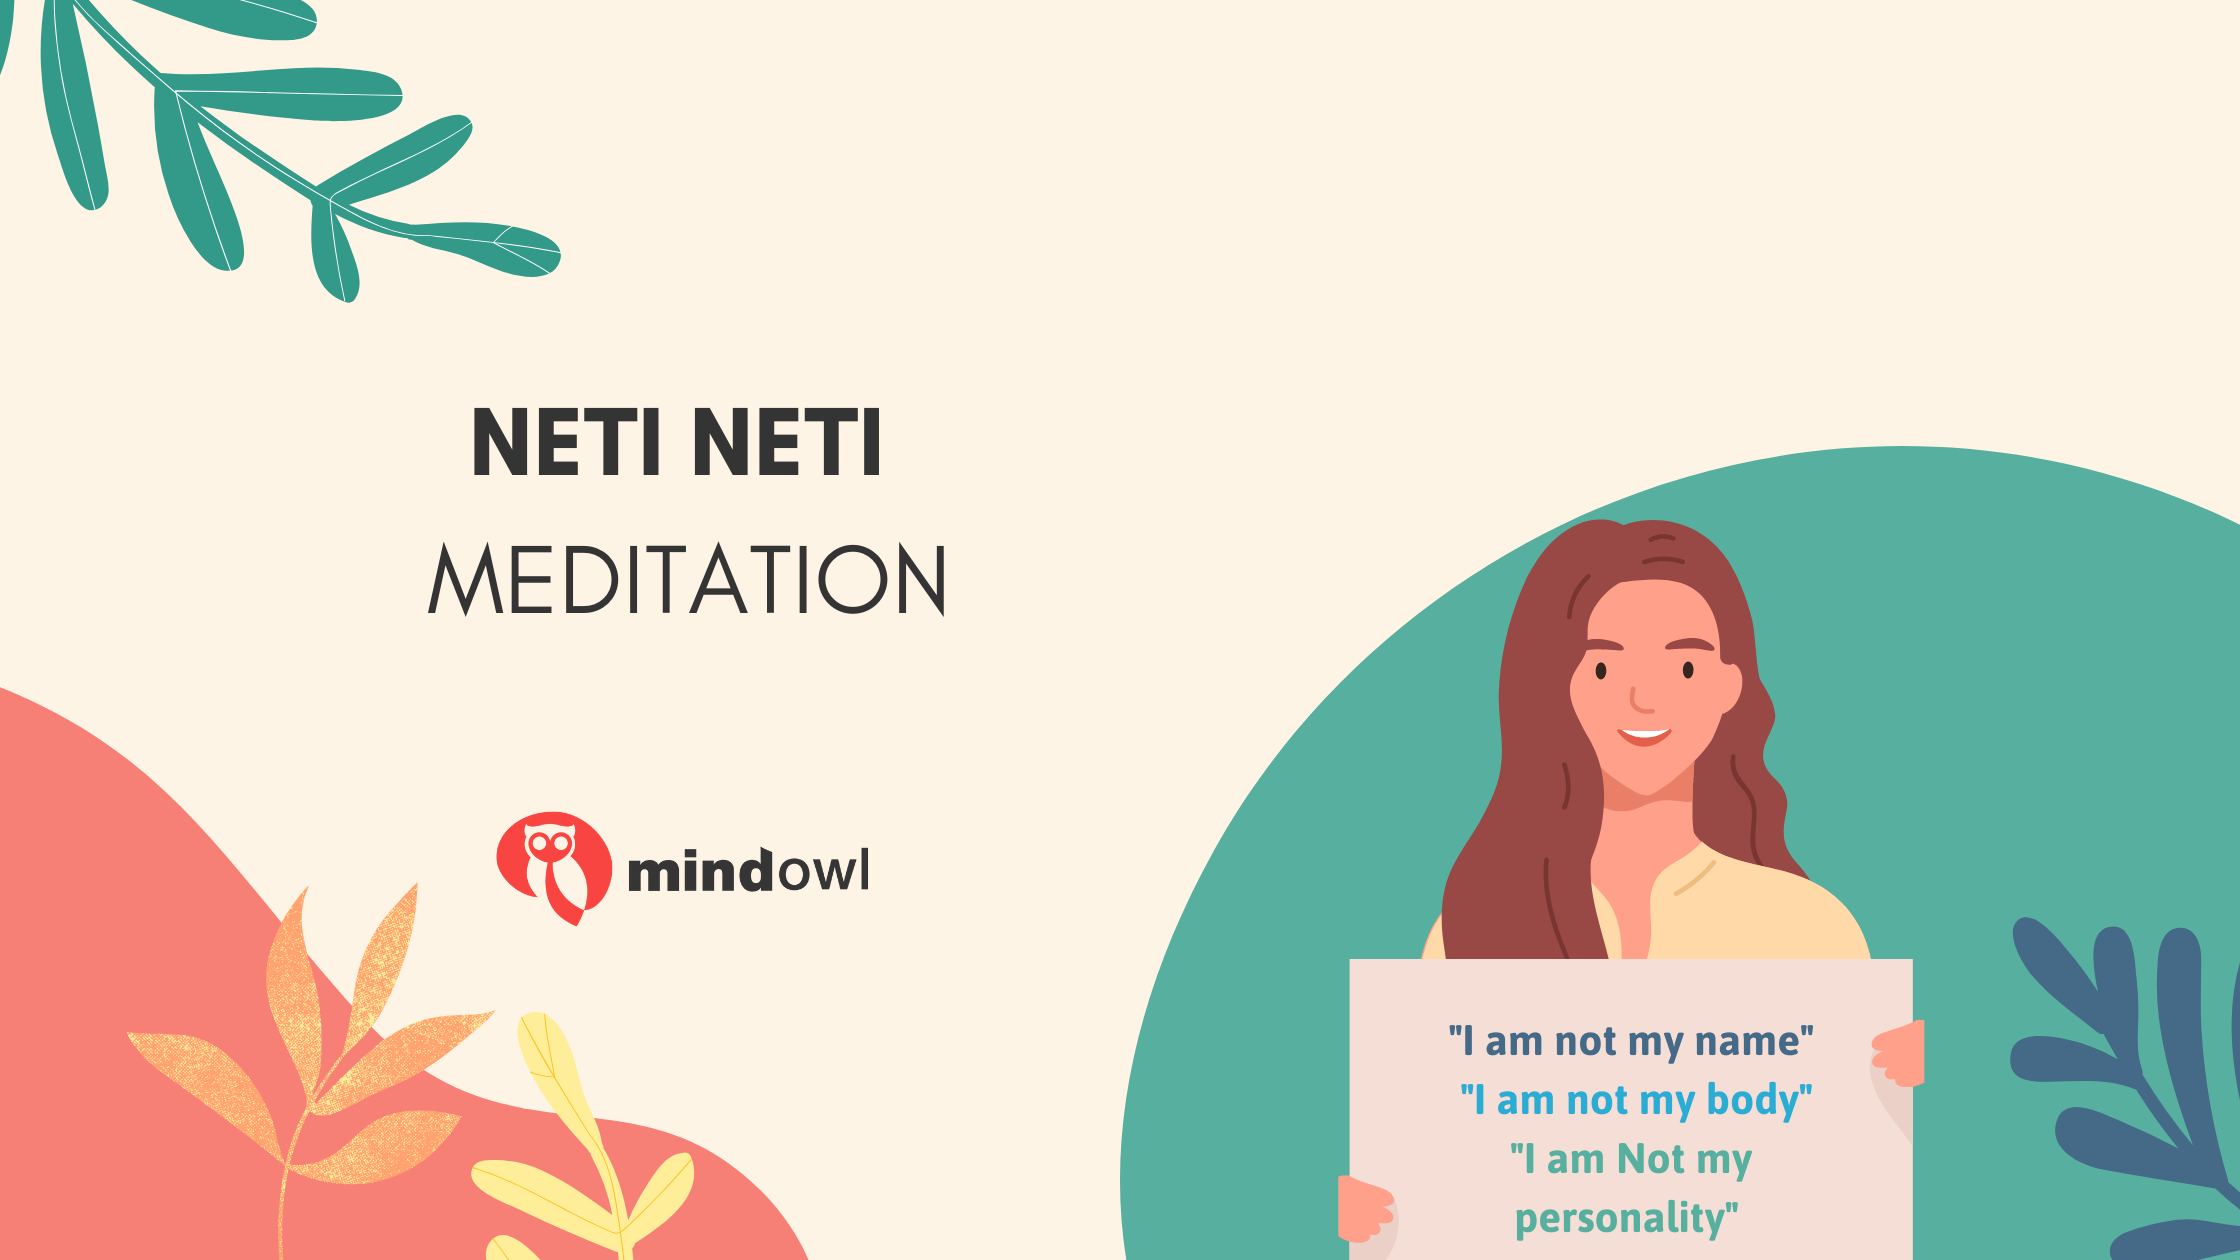 Neti Neti Meditation: How to Find Your True Self